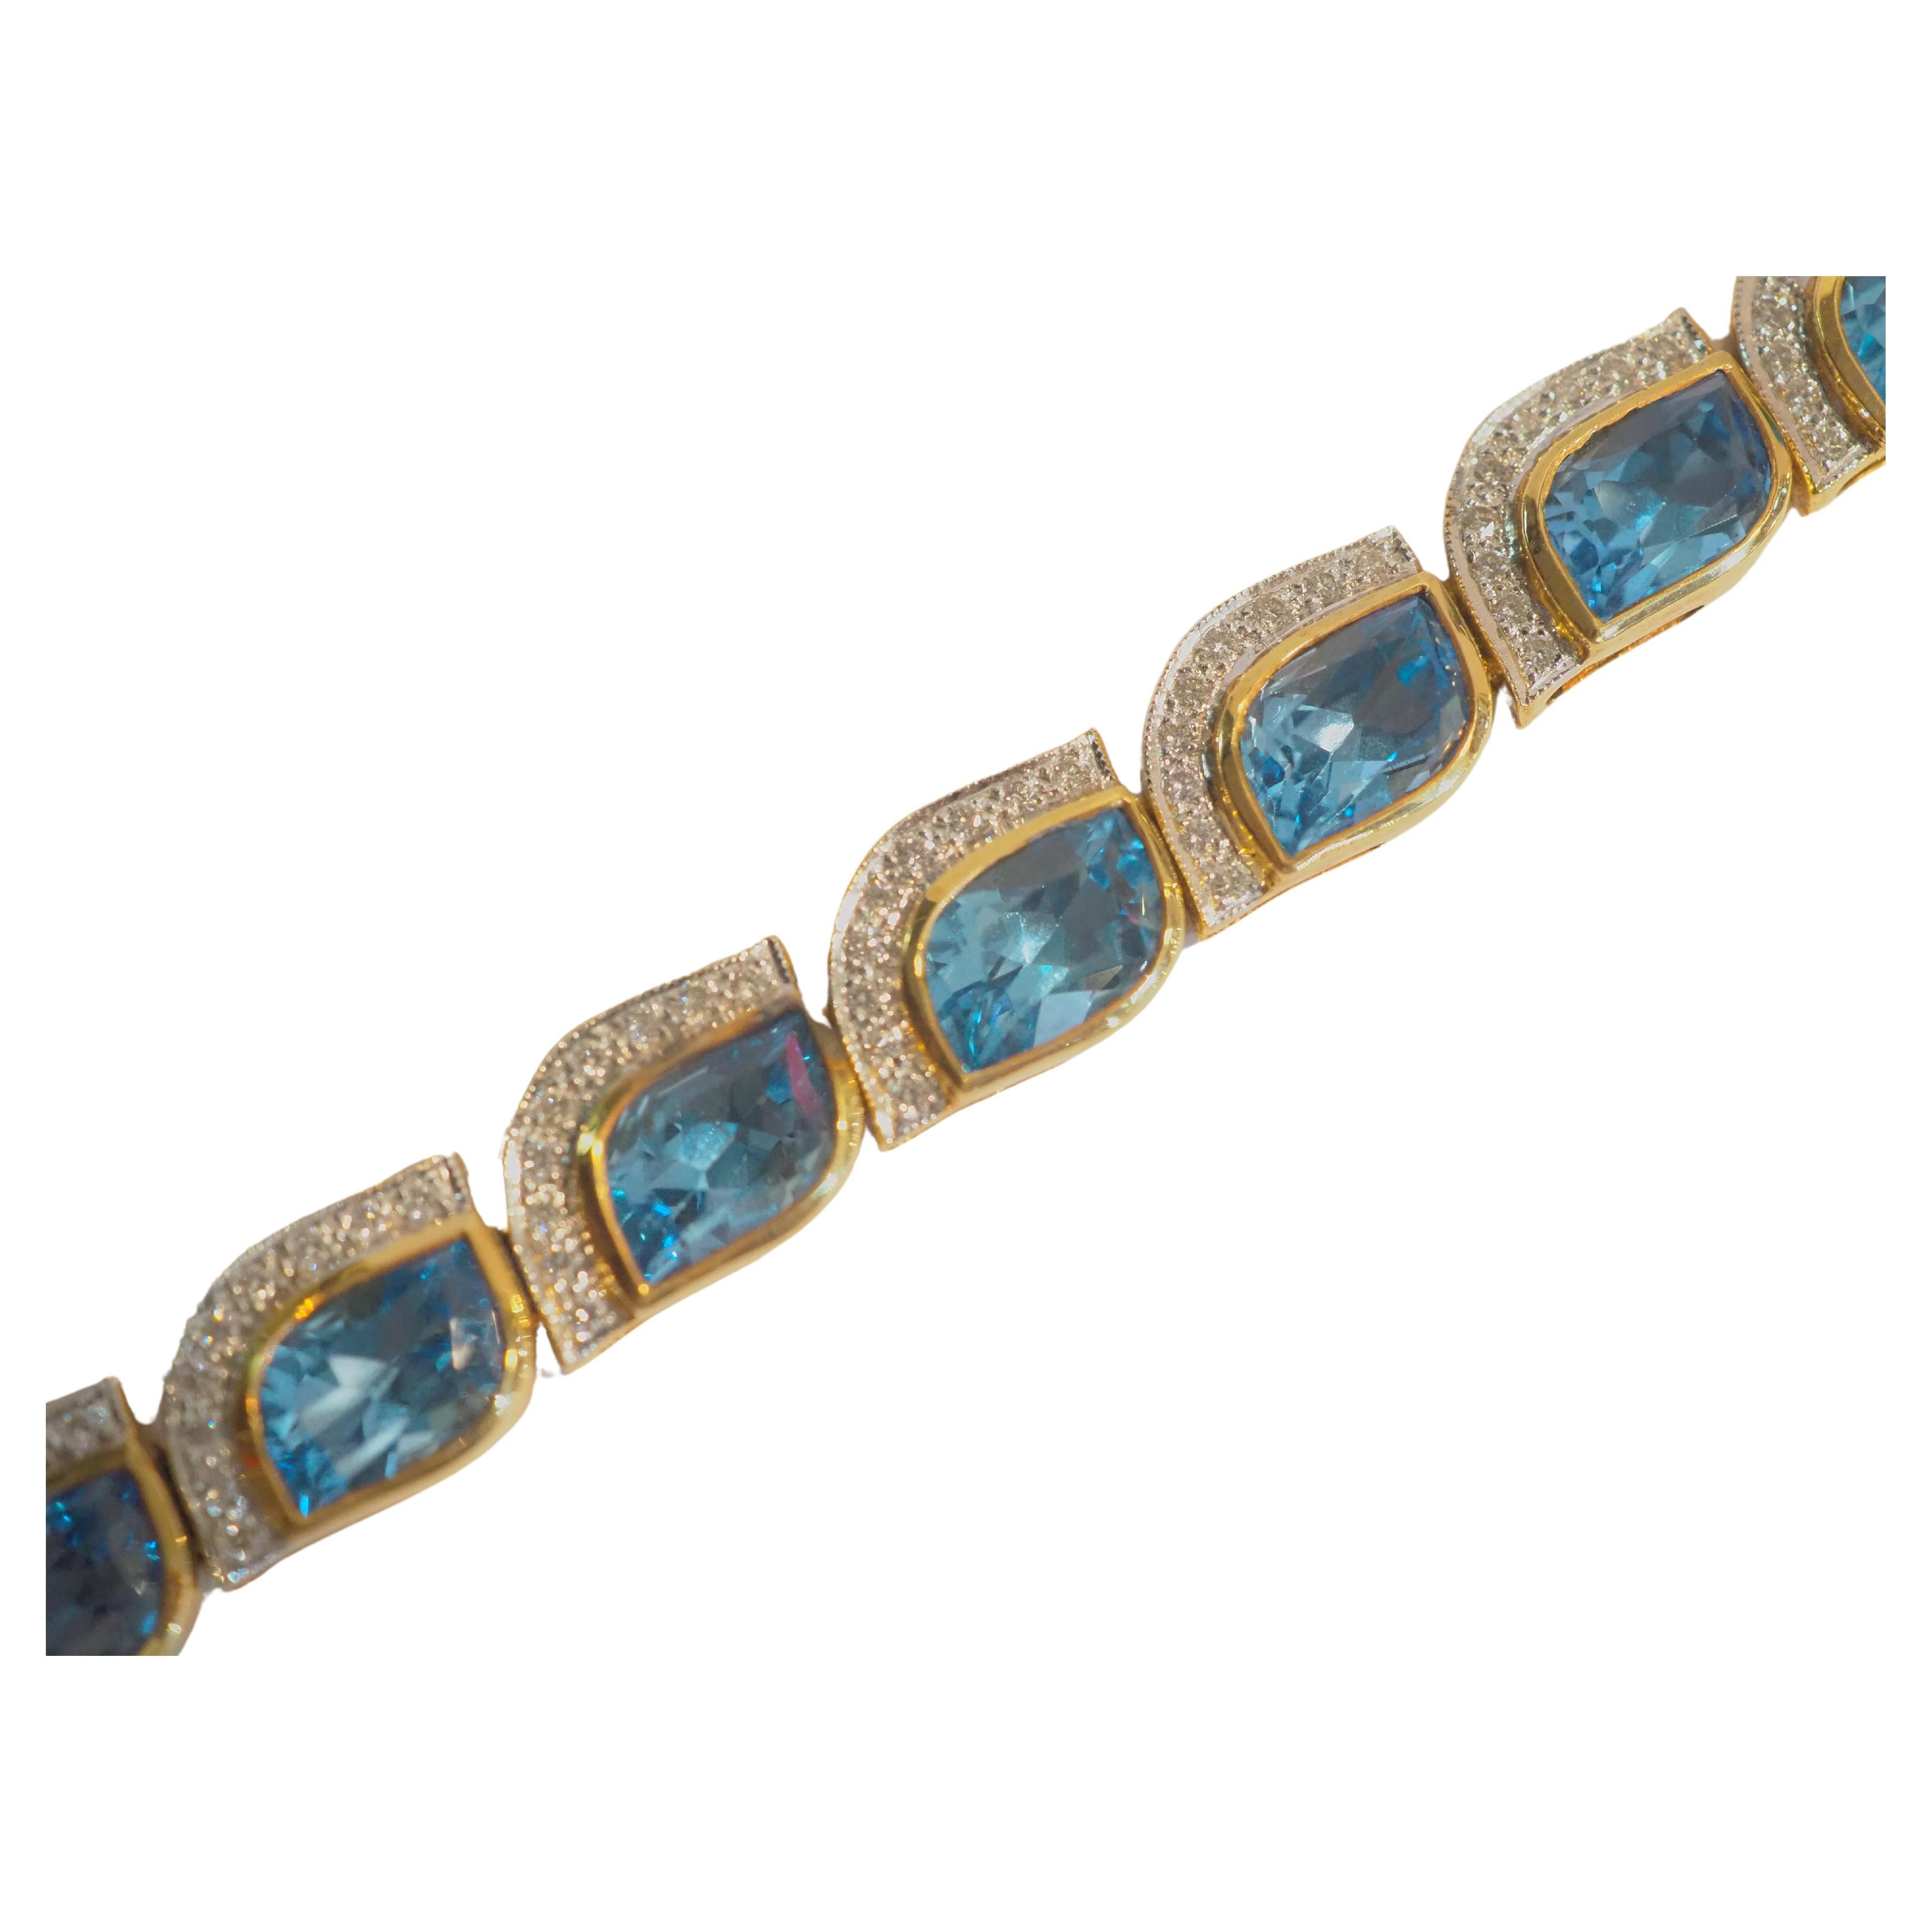 18K Gold 30.16 Carat Mixed Cut Blue Topaz & 1.41ct Diamond Bracelet